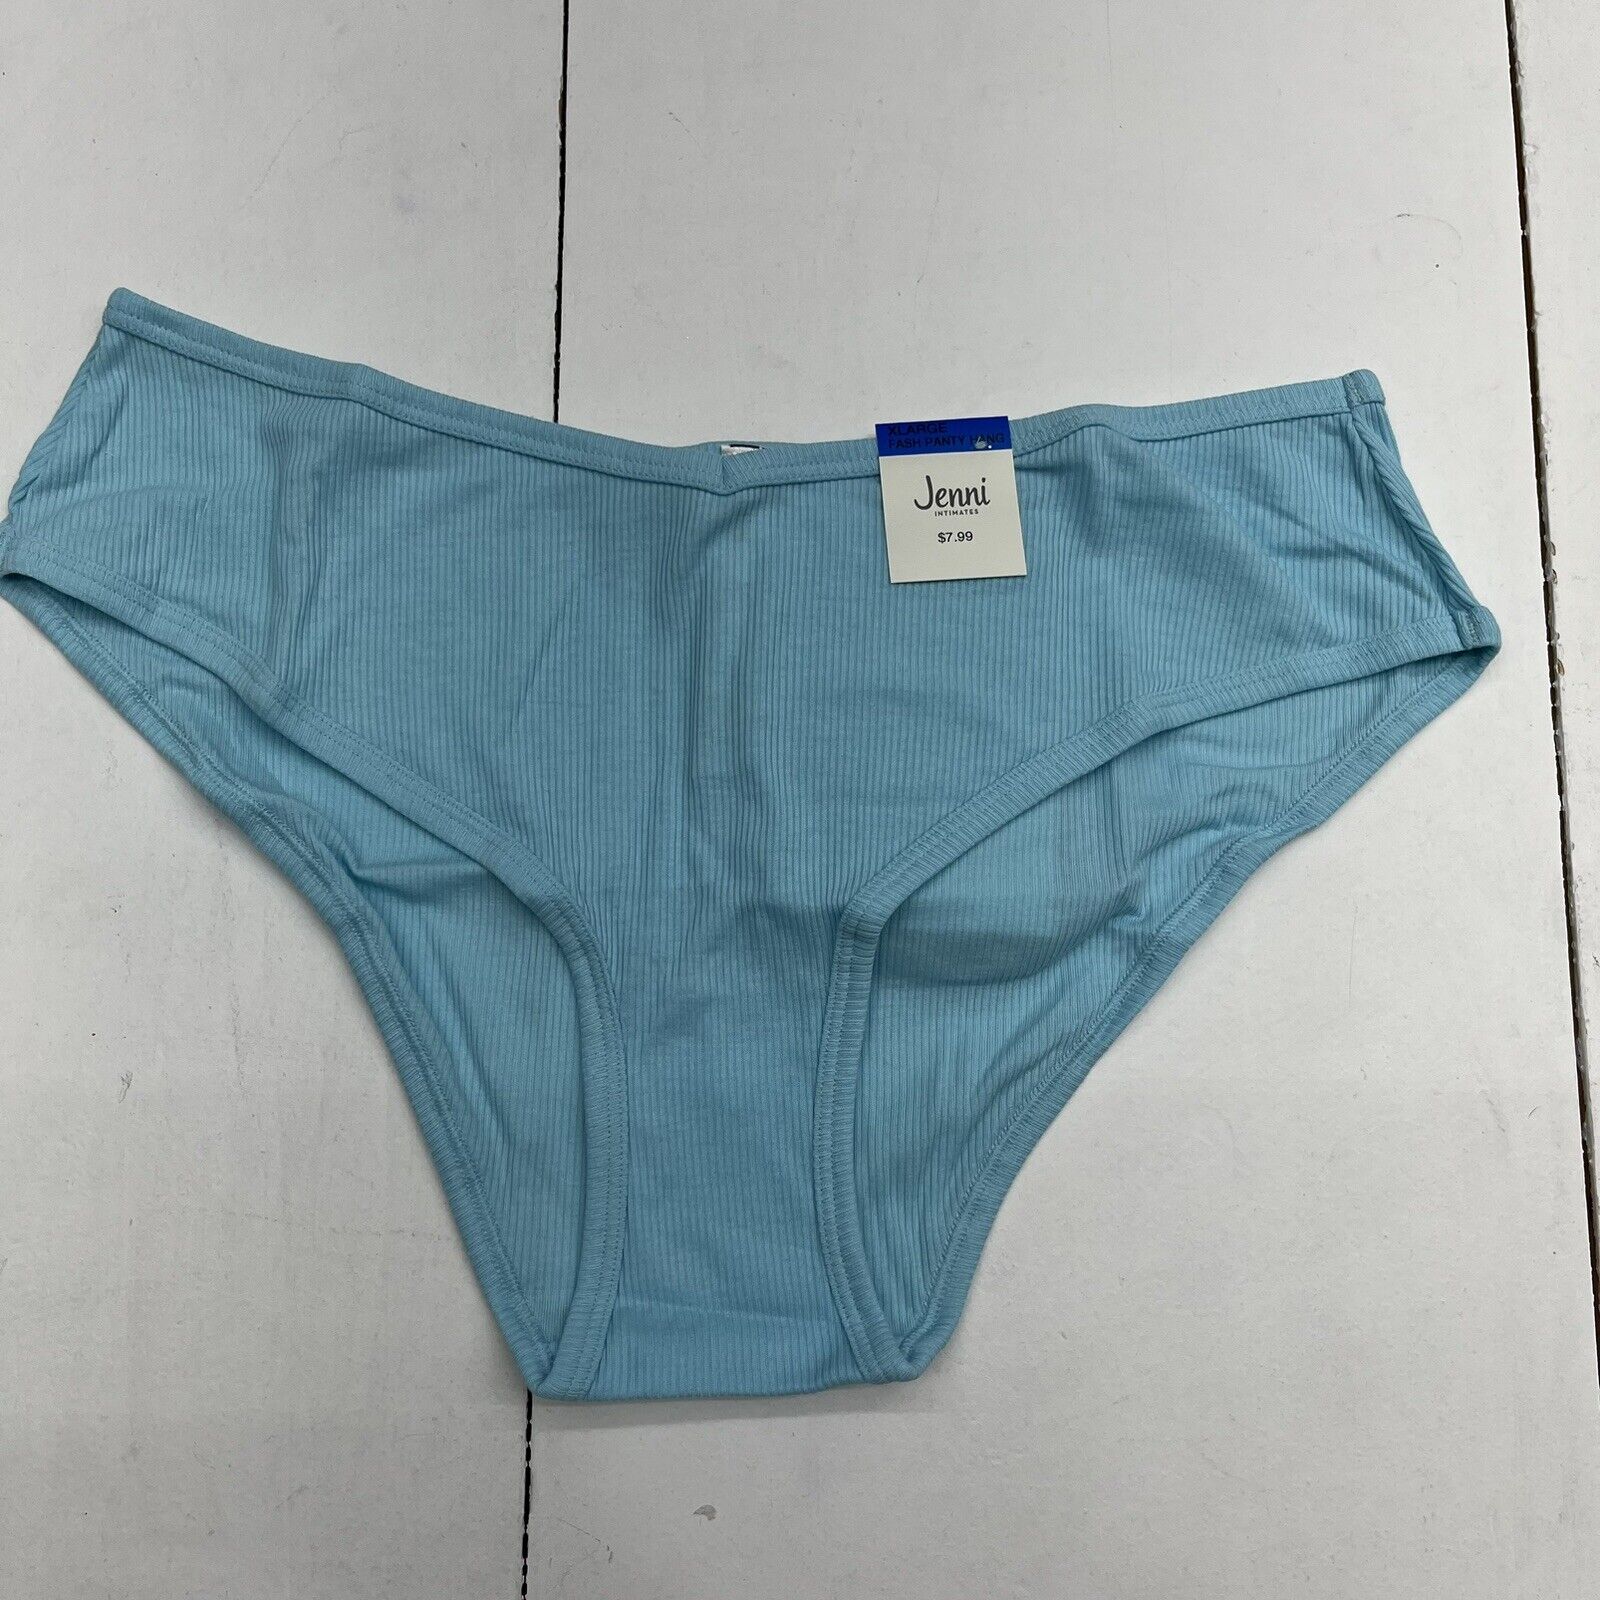 Jenni Intimates Caribbean Turquoise Bikini Panty Women's Size XL